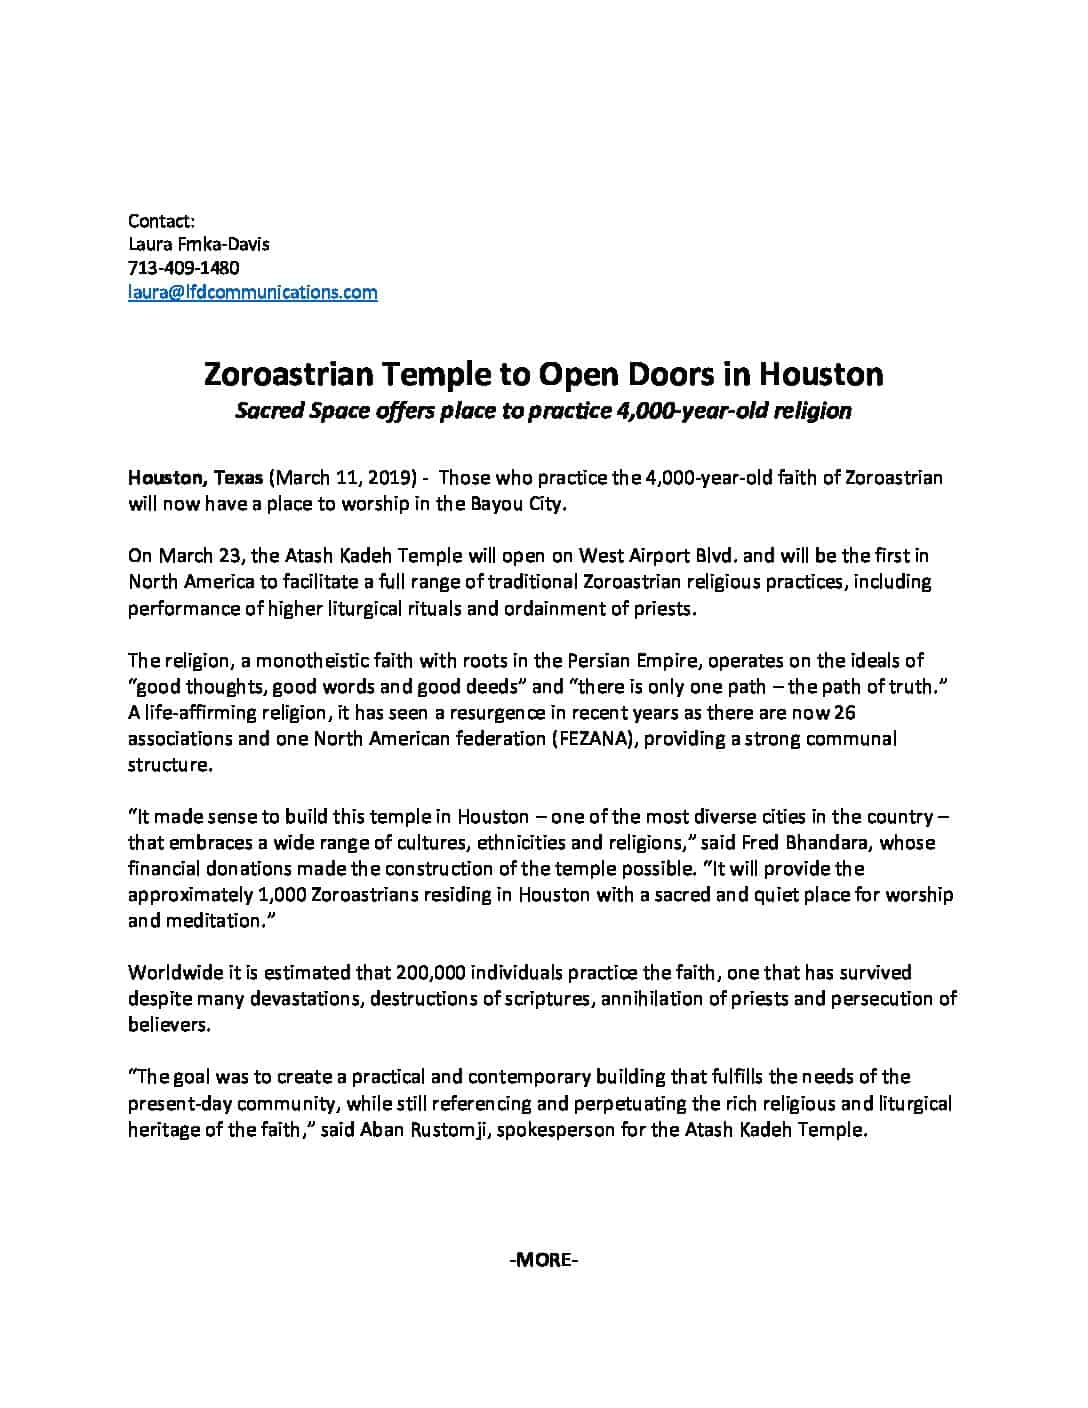 Zoroastrian Temple Press Release